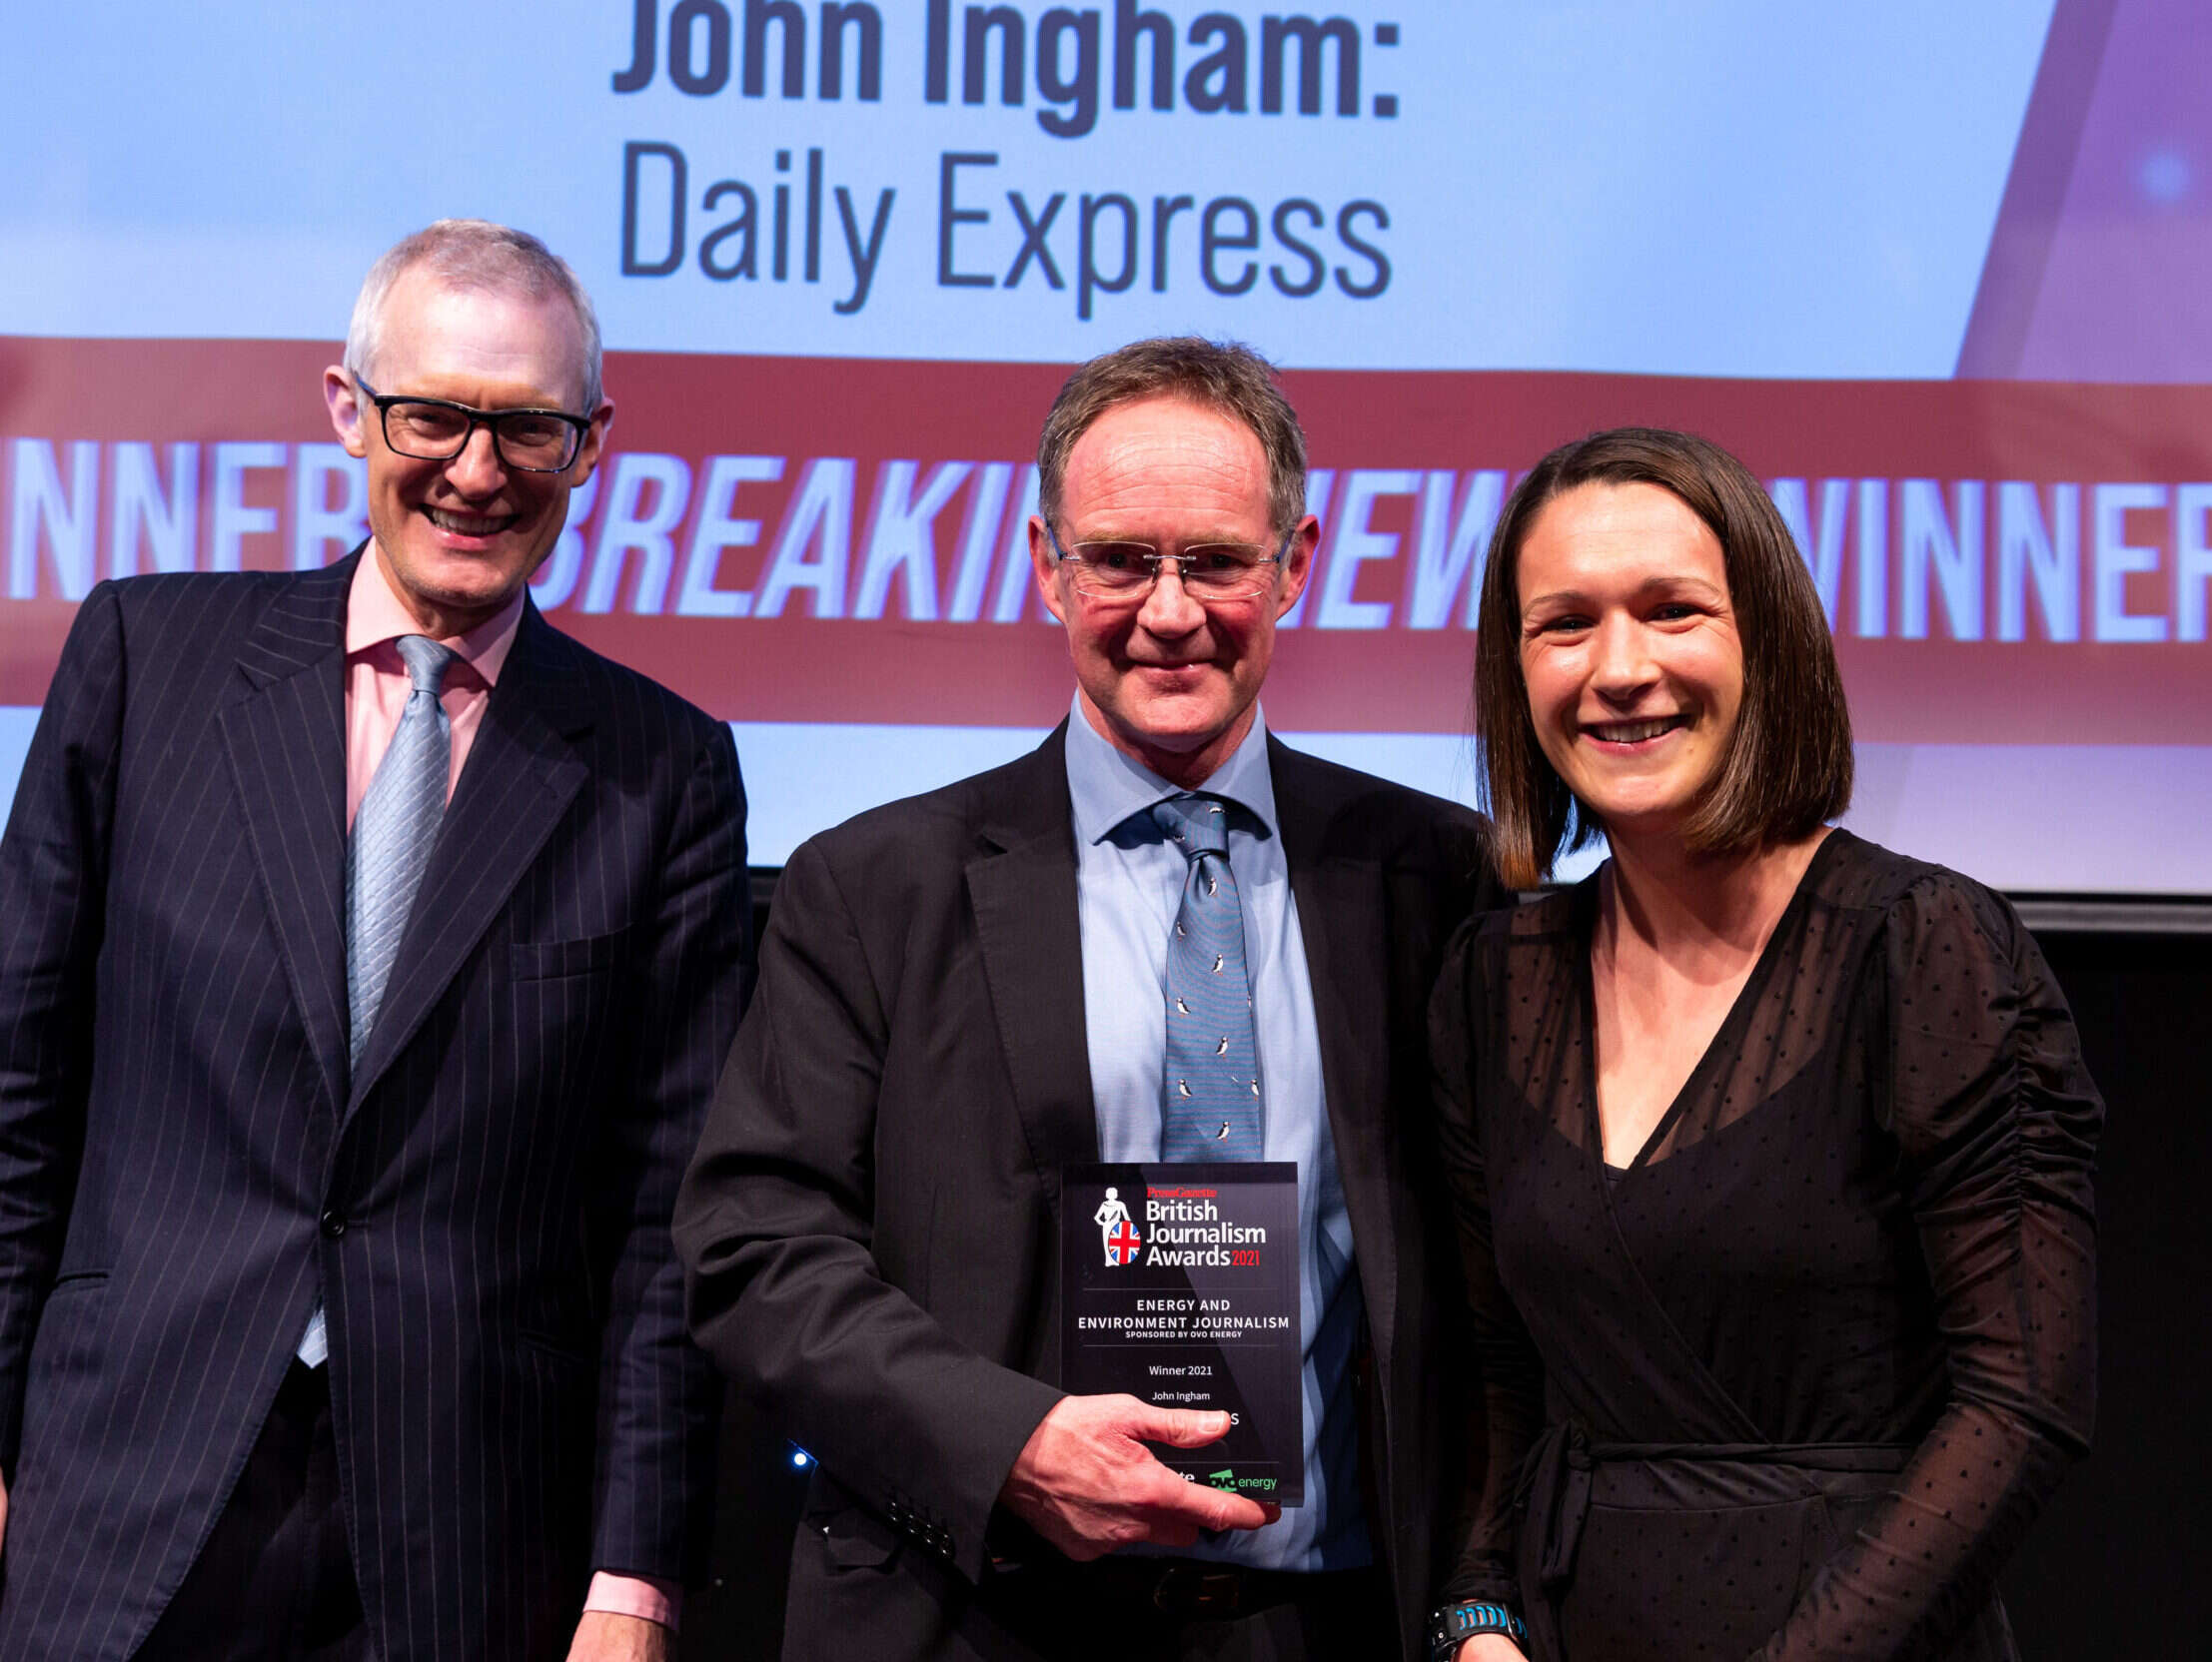 John Ingham environment award|